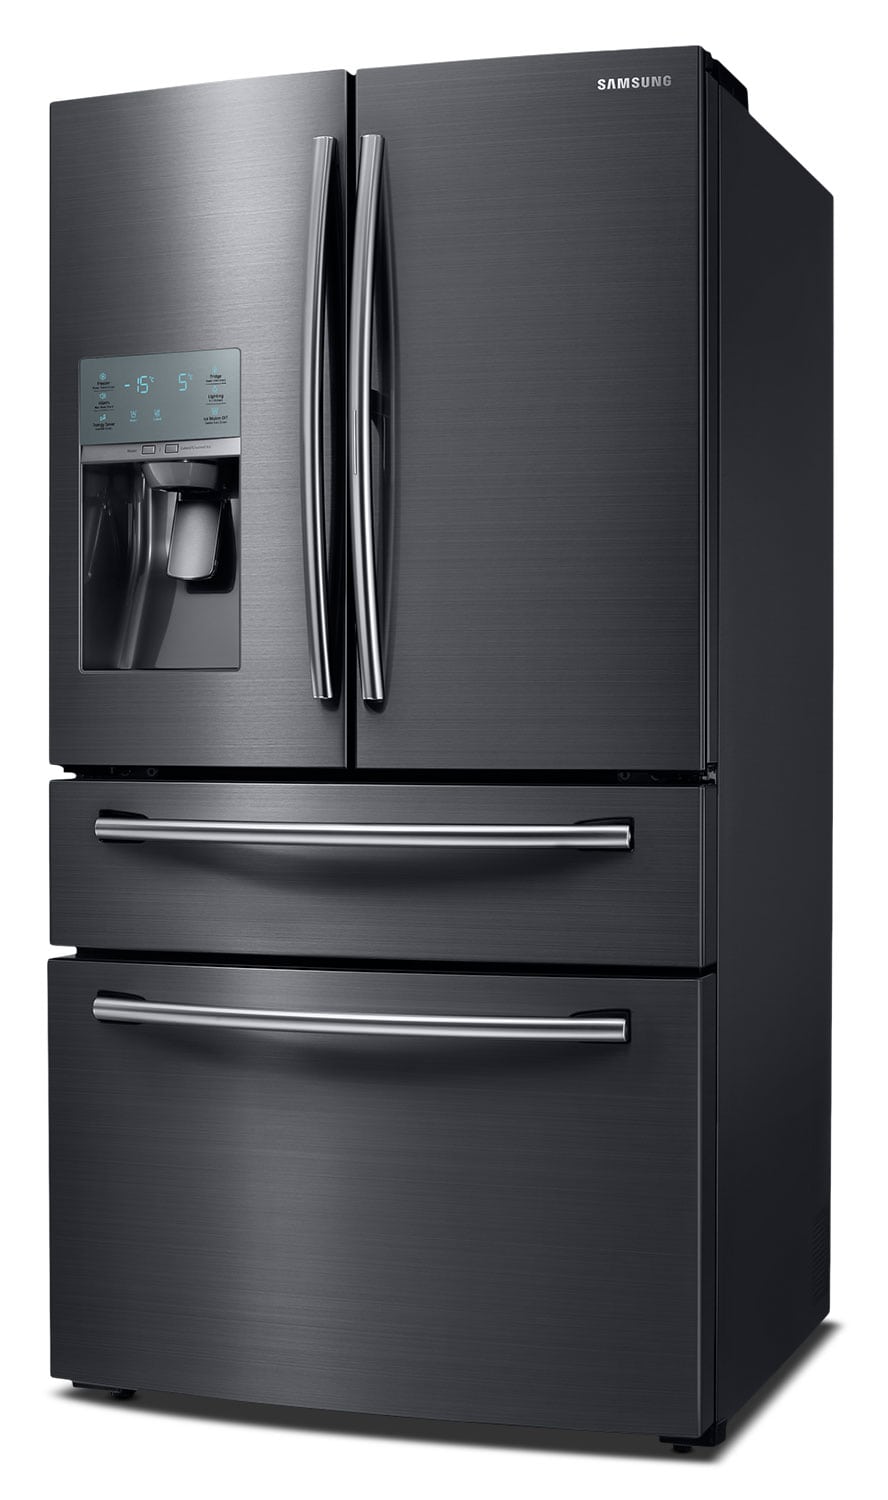 Samsung 27.8 Cu. Ft. French-Door Refrigerator – Black Stainless Steel Samsung Stainless Steel Black Refrigerator